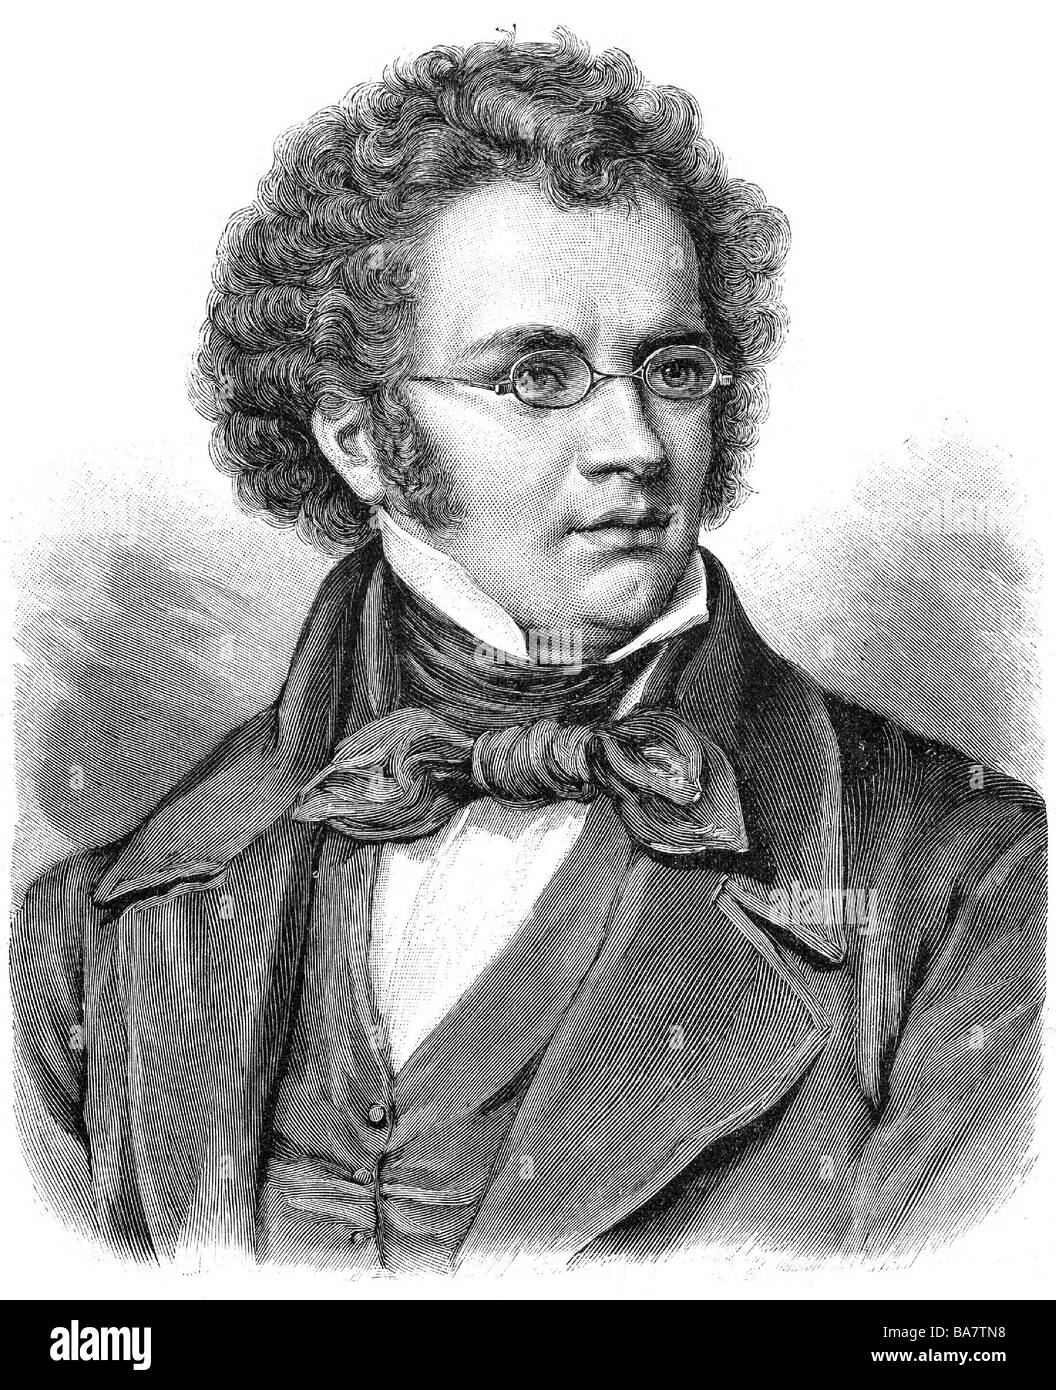 Schubert, Franz, 31.1.1797 - 19.11.1828, Austrian composer, portrait, wood engraving, 19th century, Stock Photo